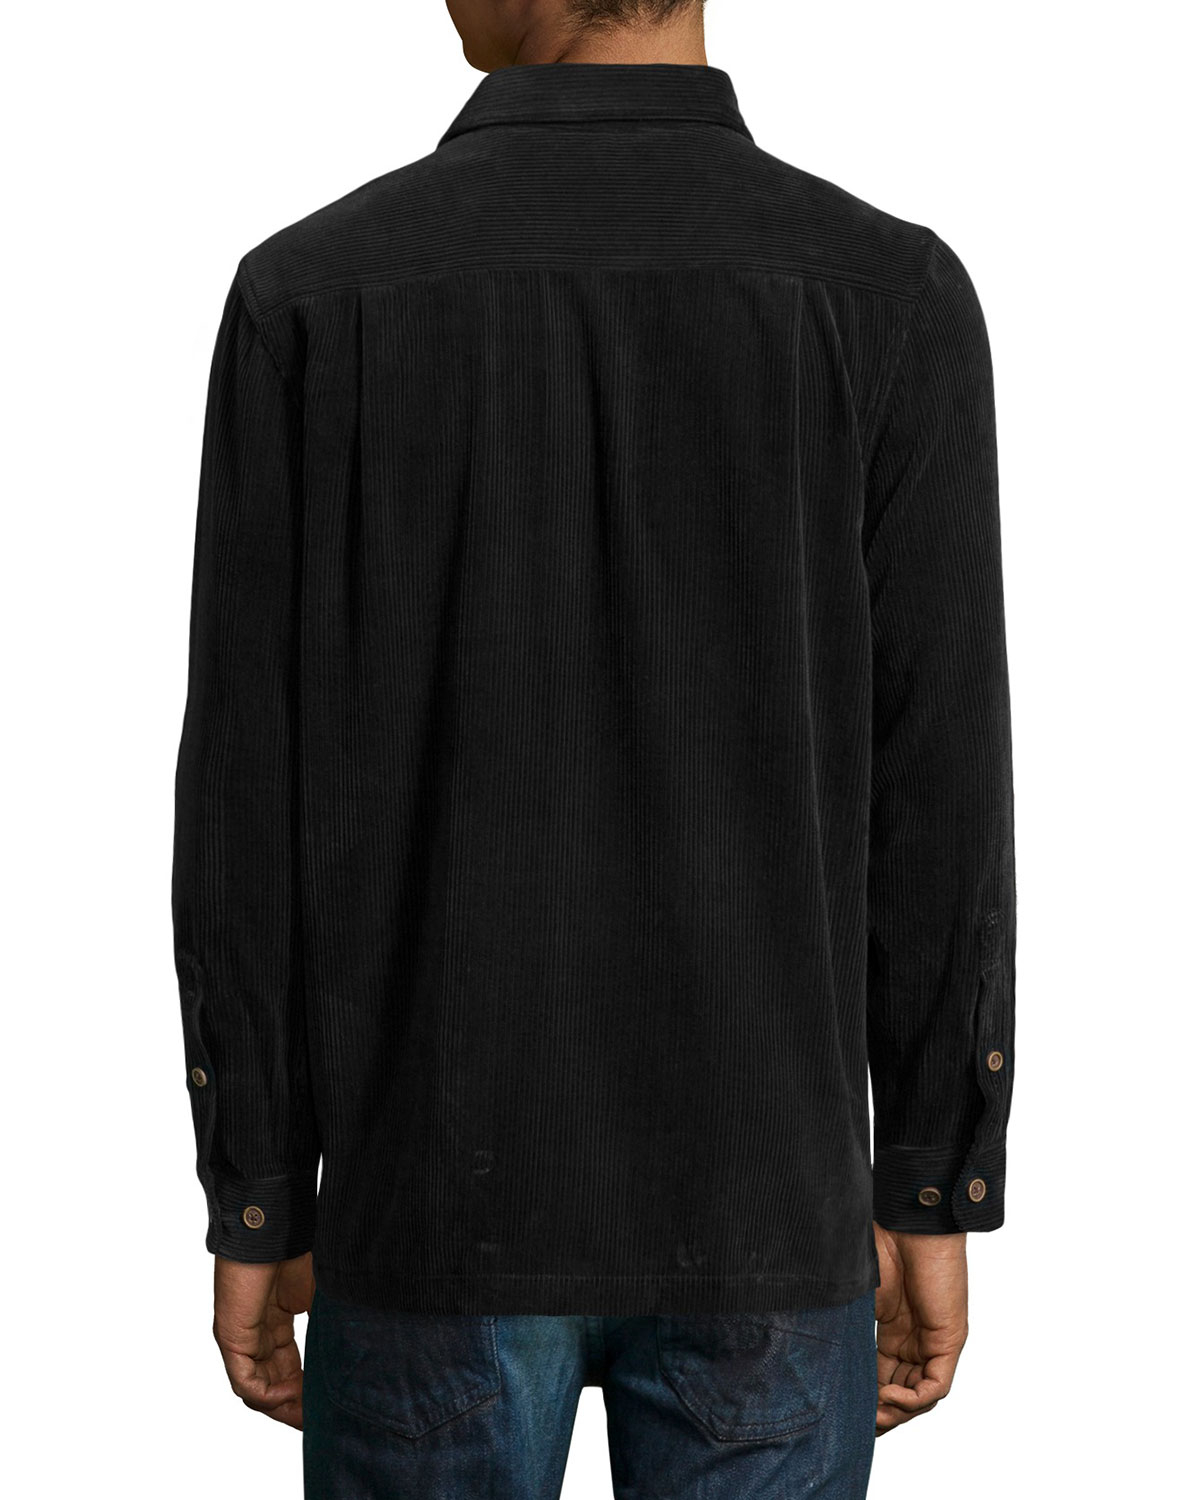 Lyst - Nat Nast Matchless Corduroy Sport Shirt in Black for Men